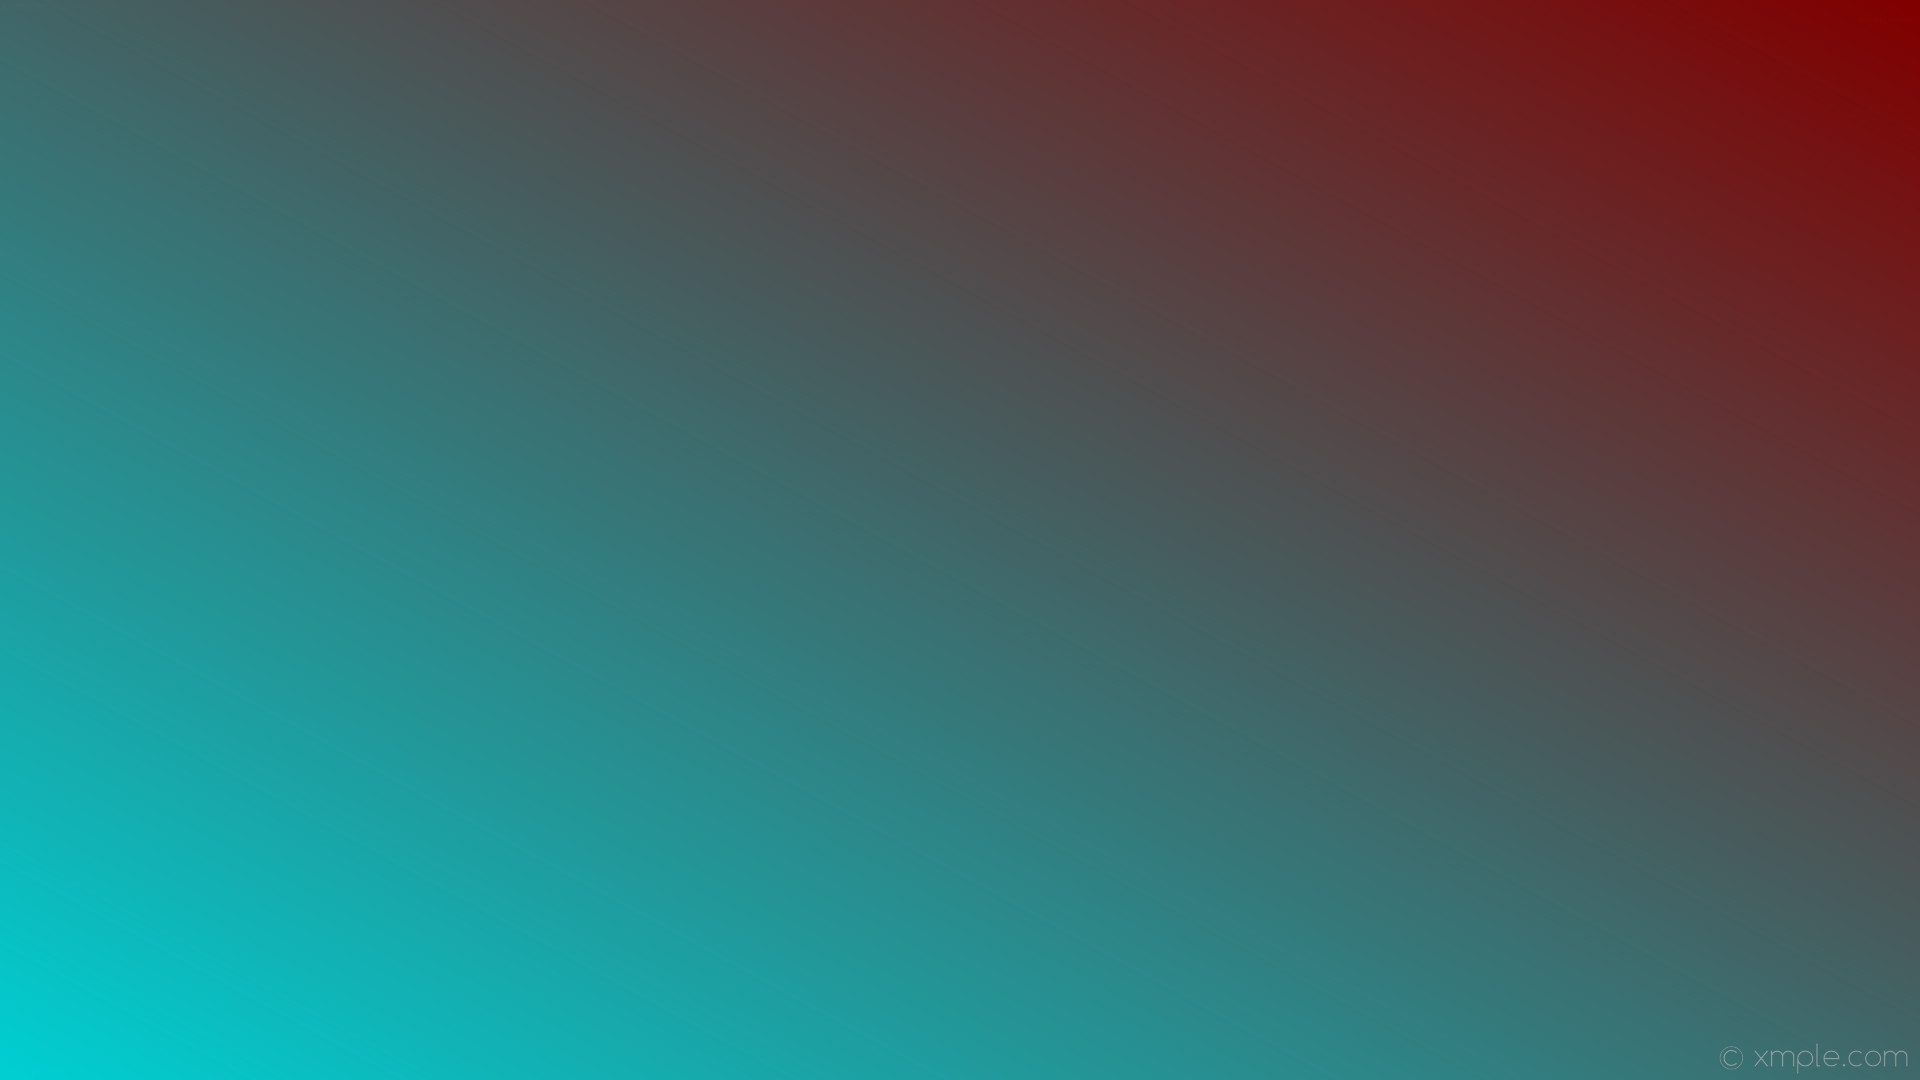 1920x1080 wallpaper gradient brown linear blue dark turquoise maroon #00ced1 #800000  210Â°